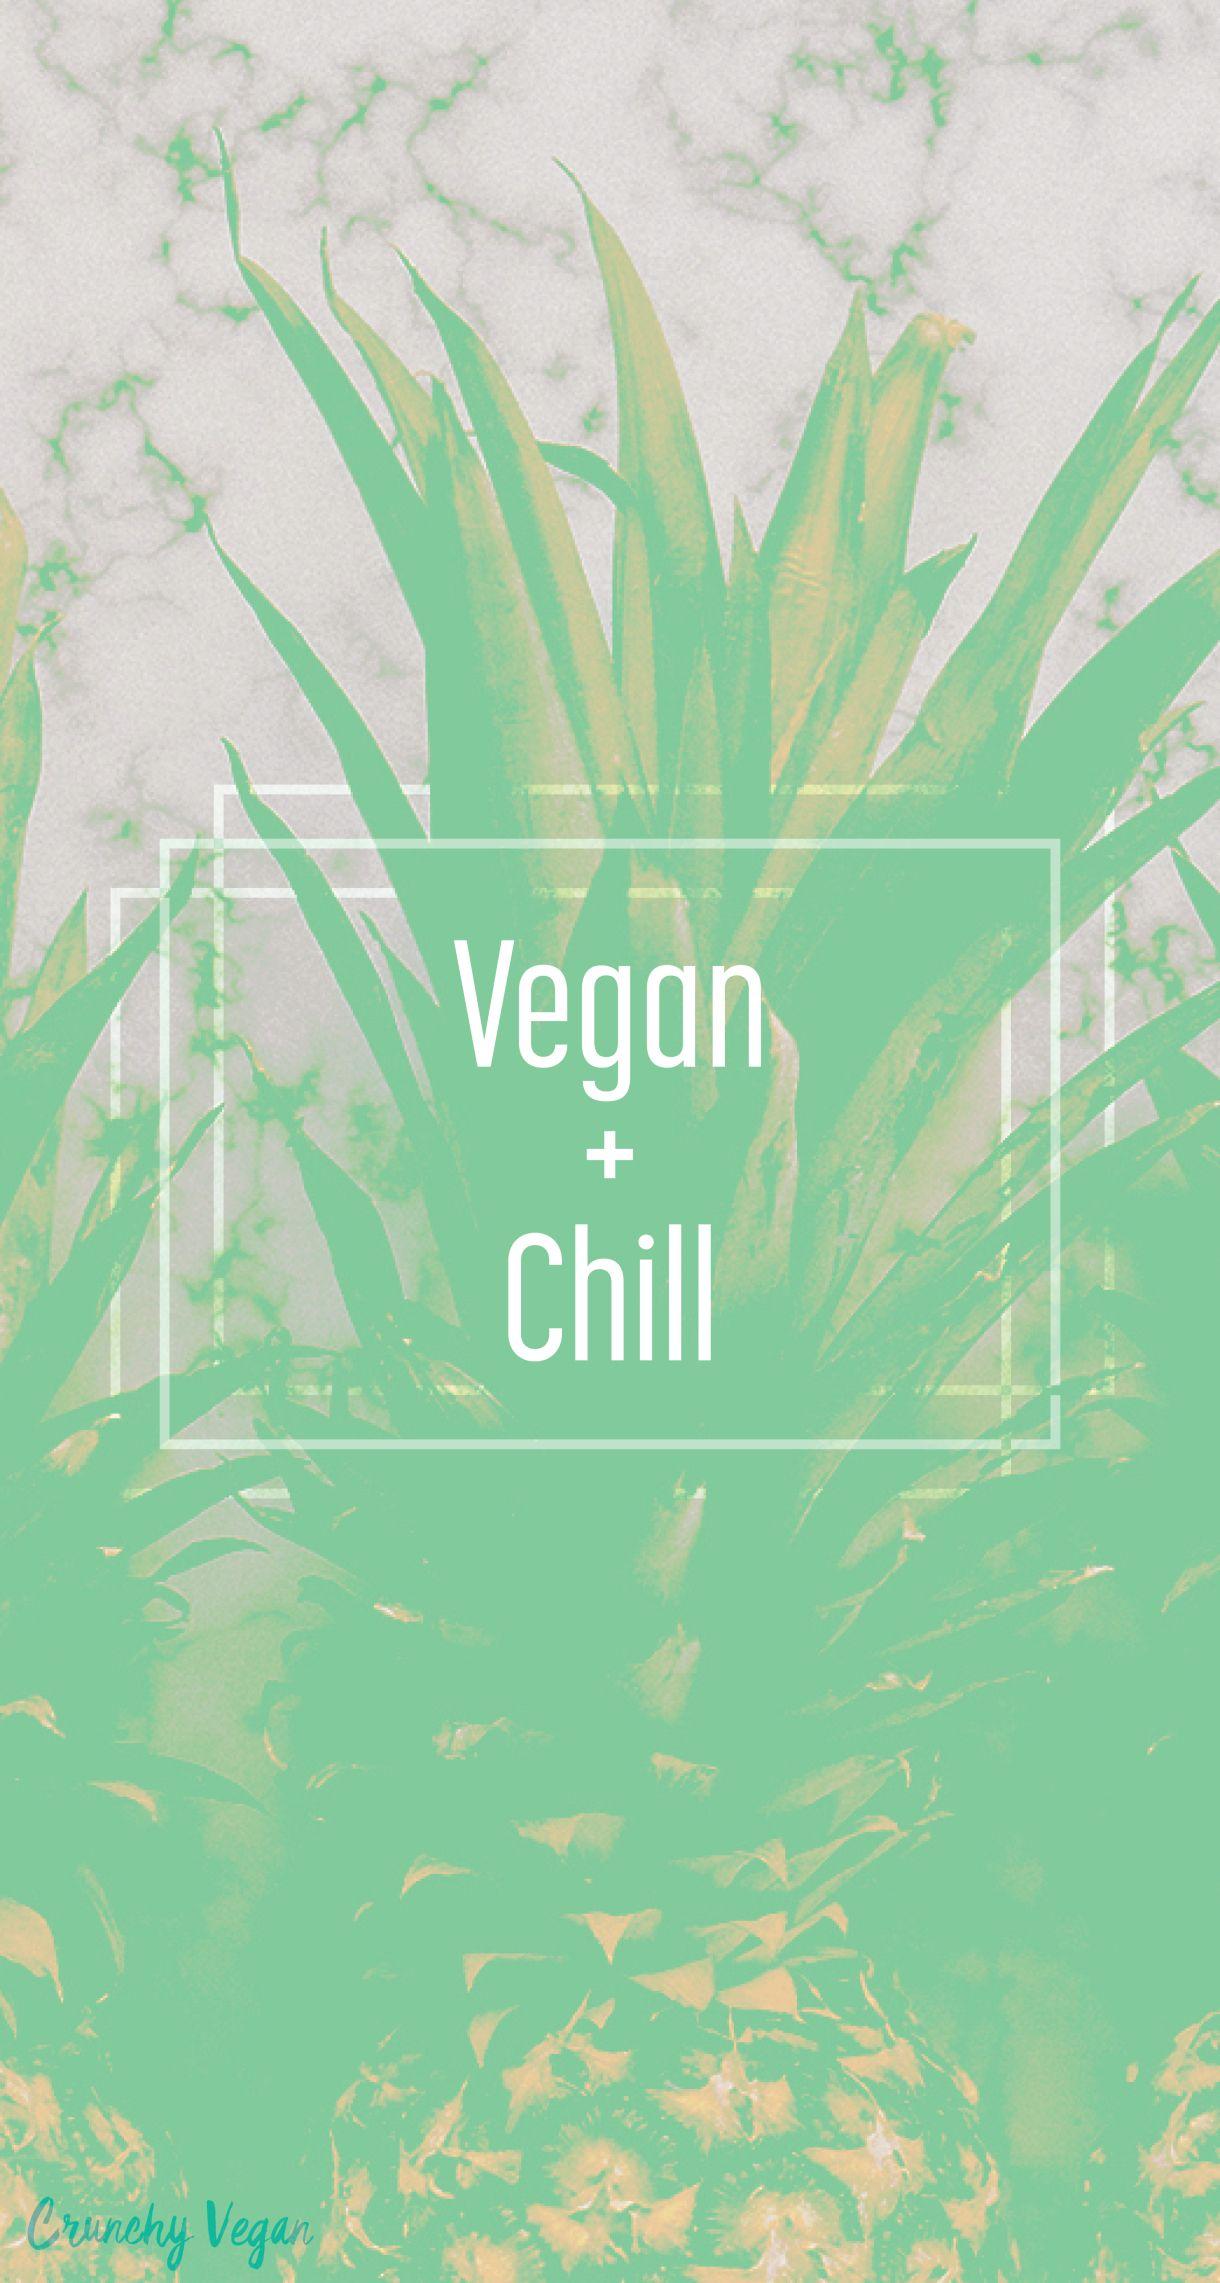 vegan and chill phone wallpaper from Crunchy Vegan. Crunchy Vegan